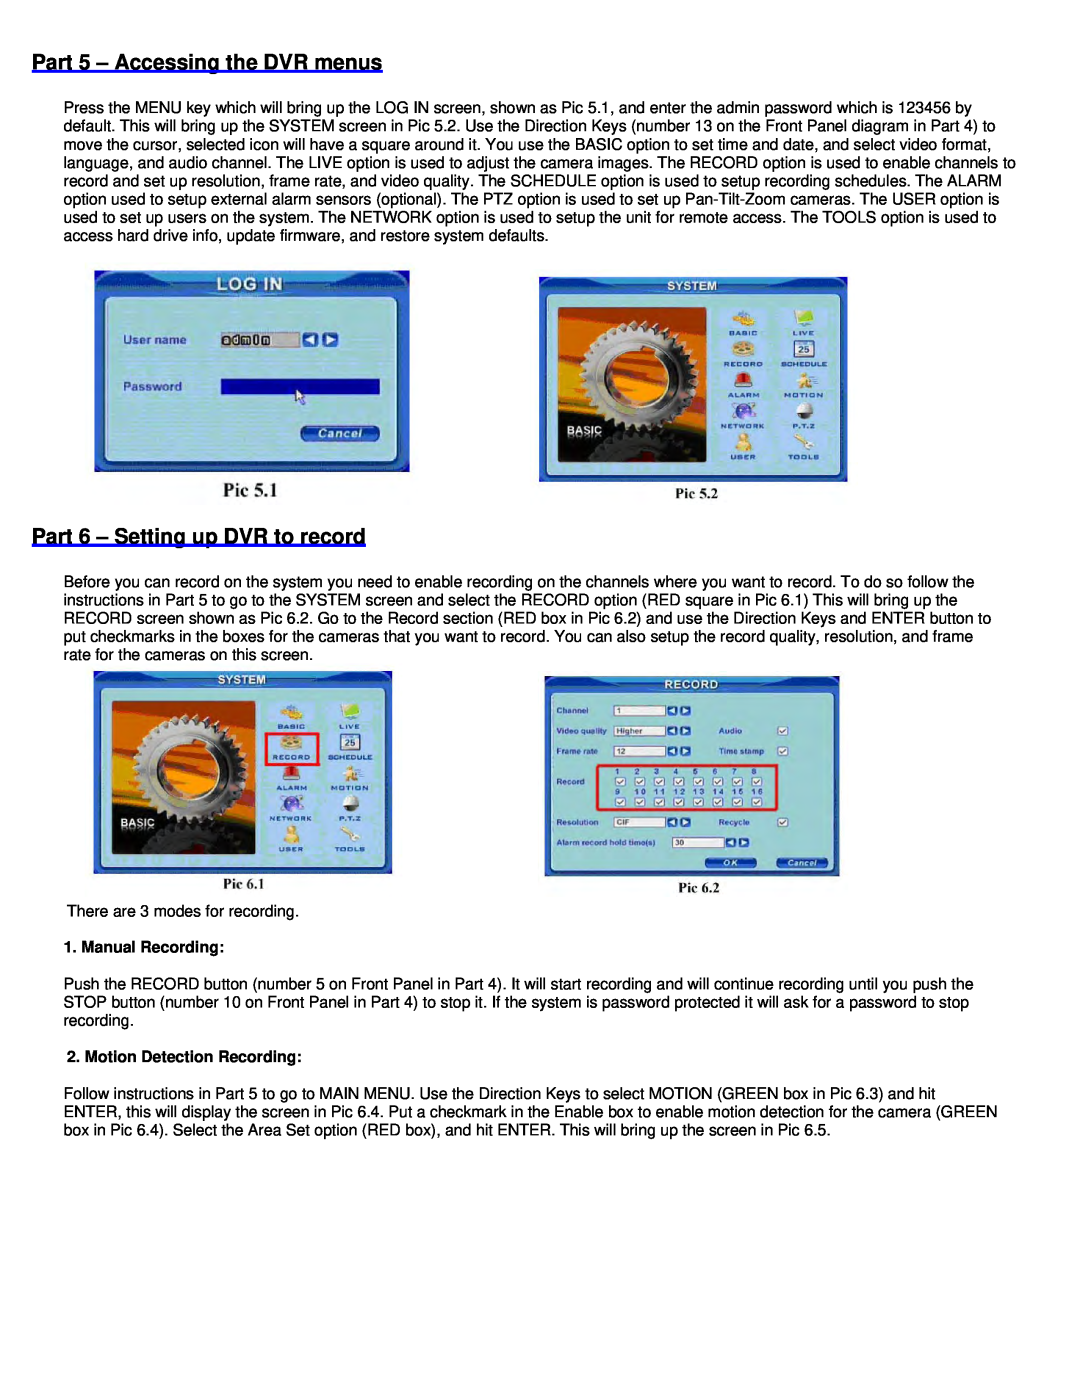 Q-See QT208-824 manual Part 5 - Accessing the DVR menus, Part 6 - Setting up DVR to record, Manual Recording 